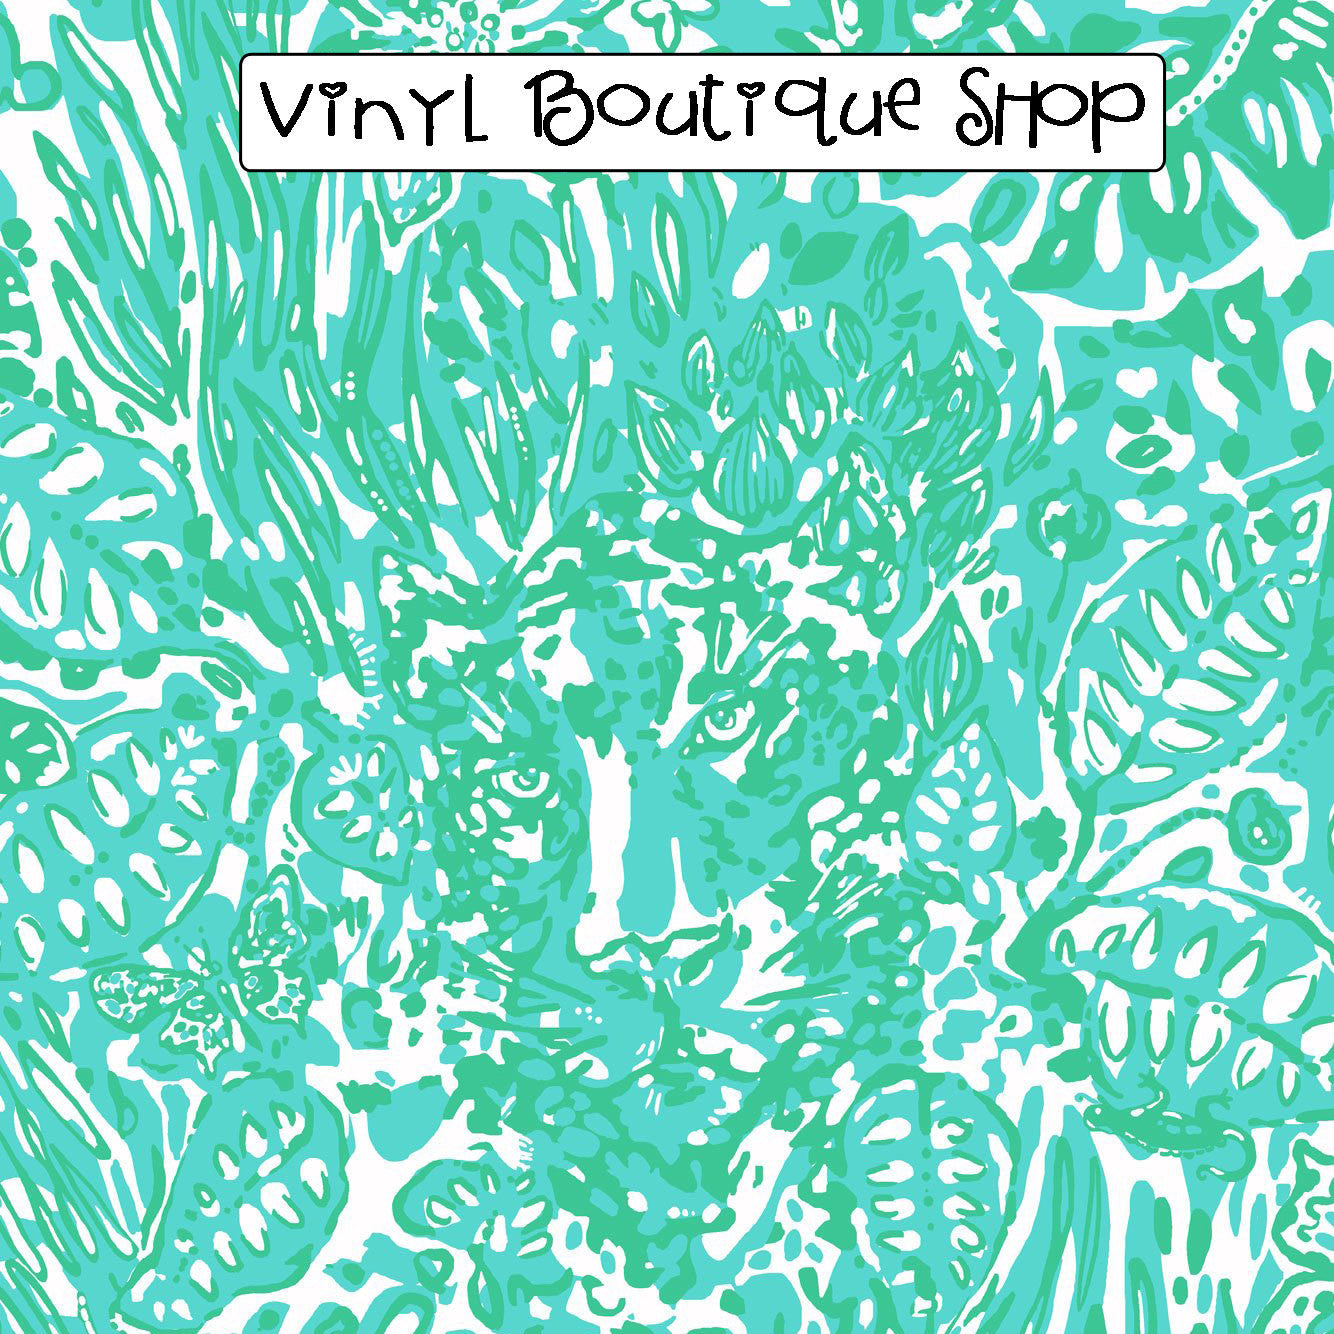 Bungle Jungle Lilly Inspired Vinyl - Vinyl Boutique Shop